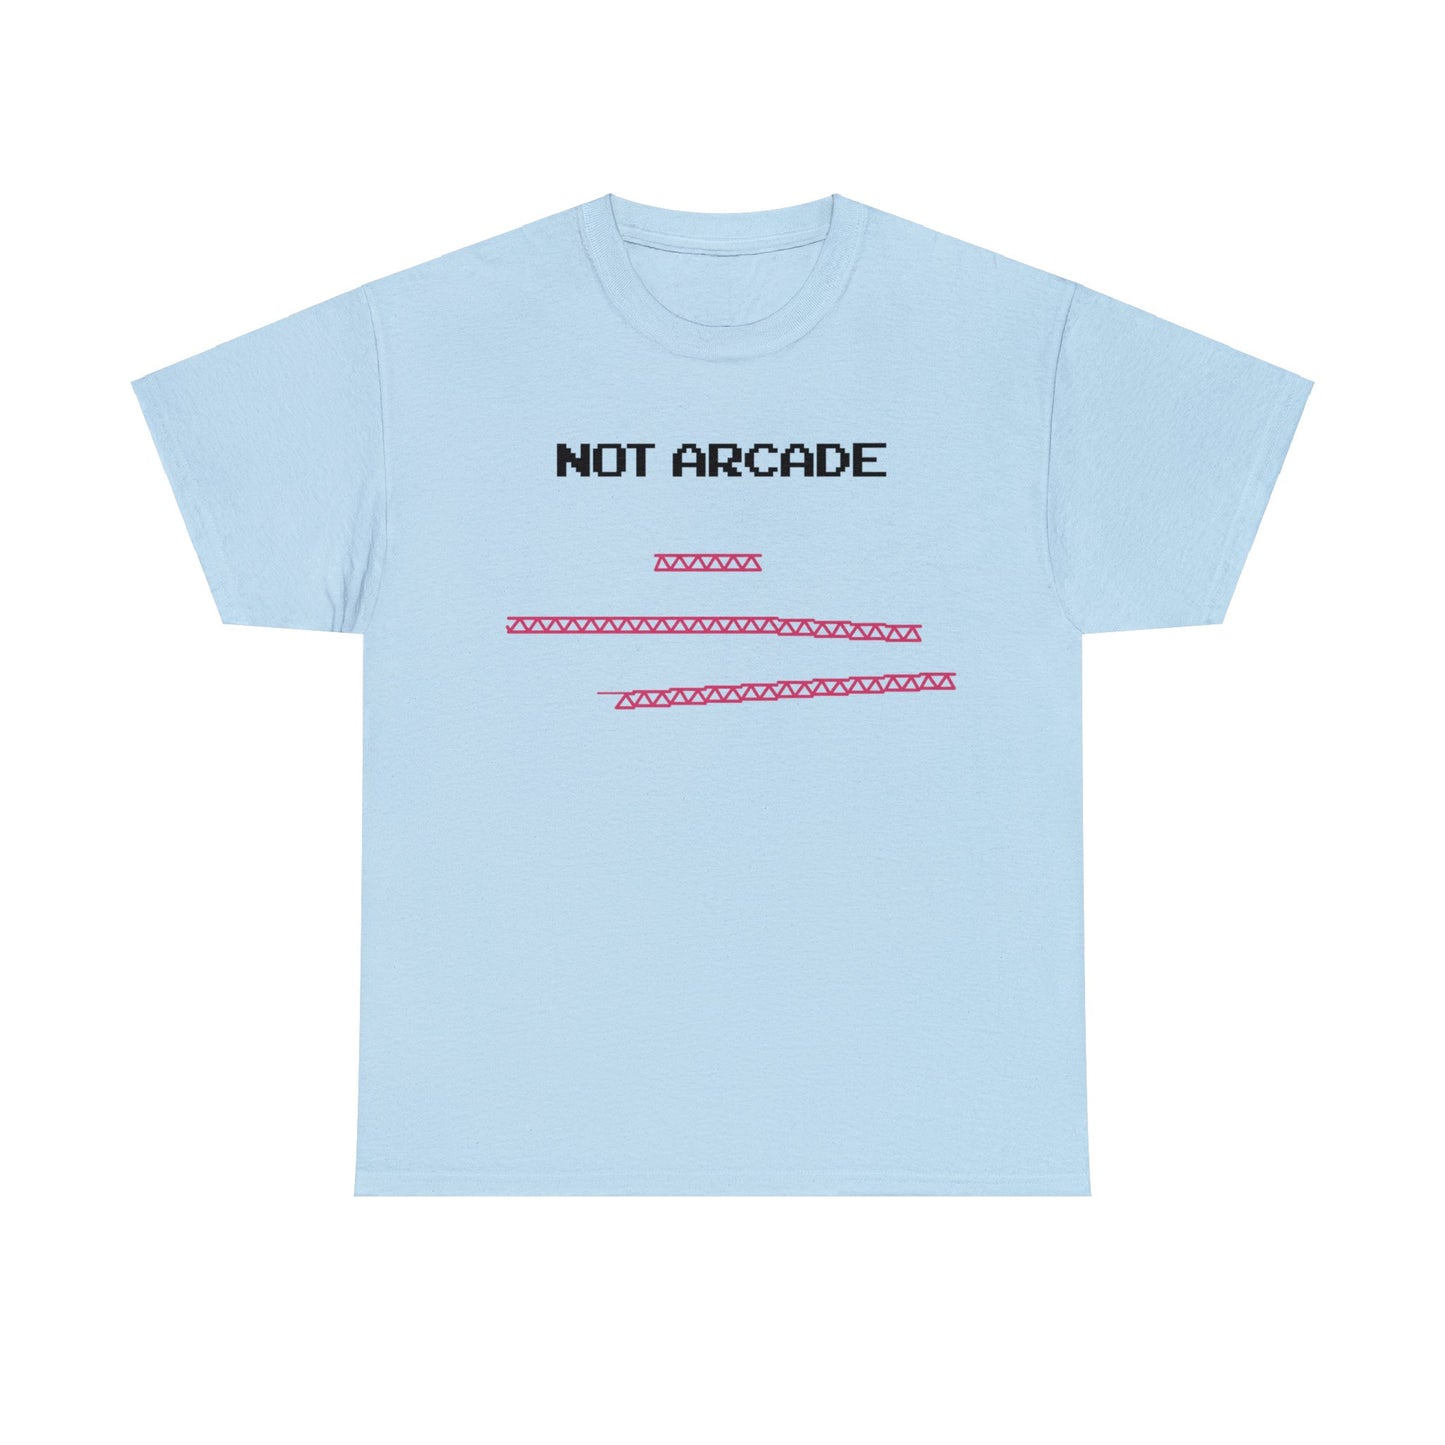 NOT ARCADE. (educational t-shirt)